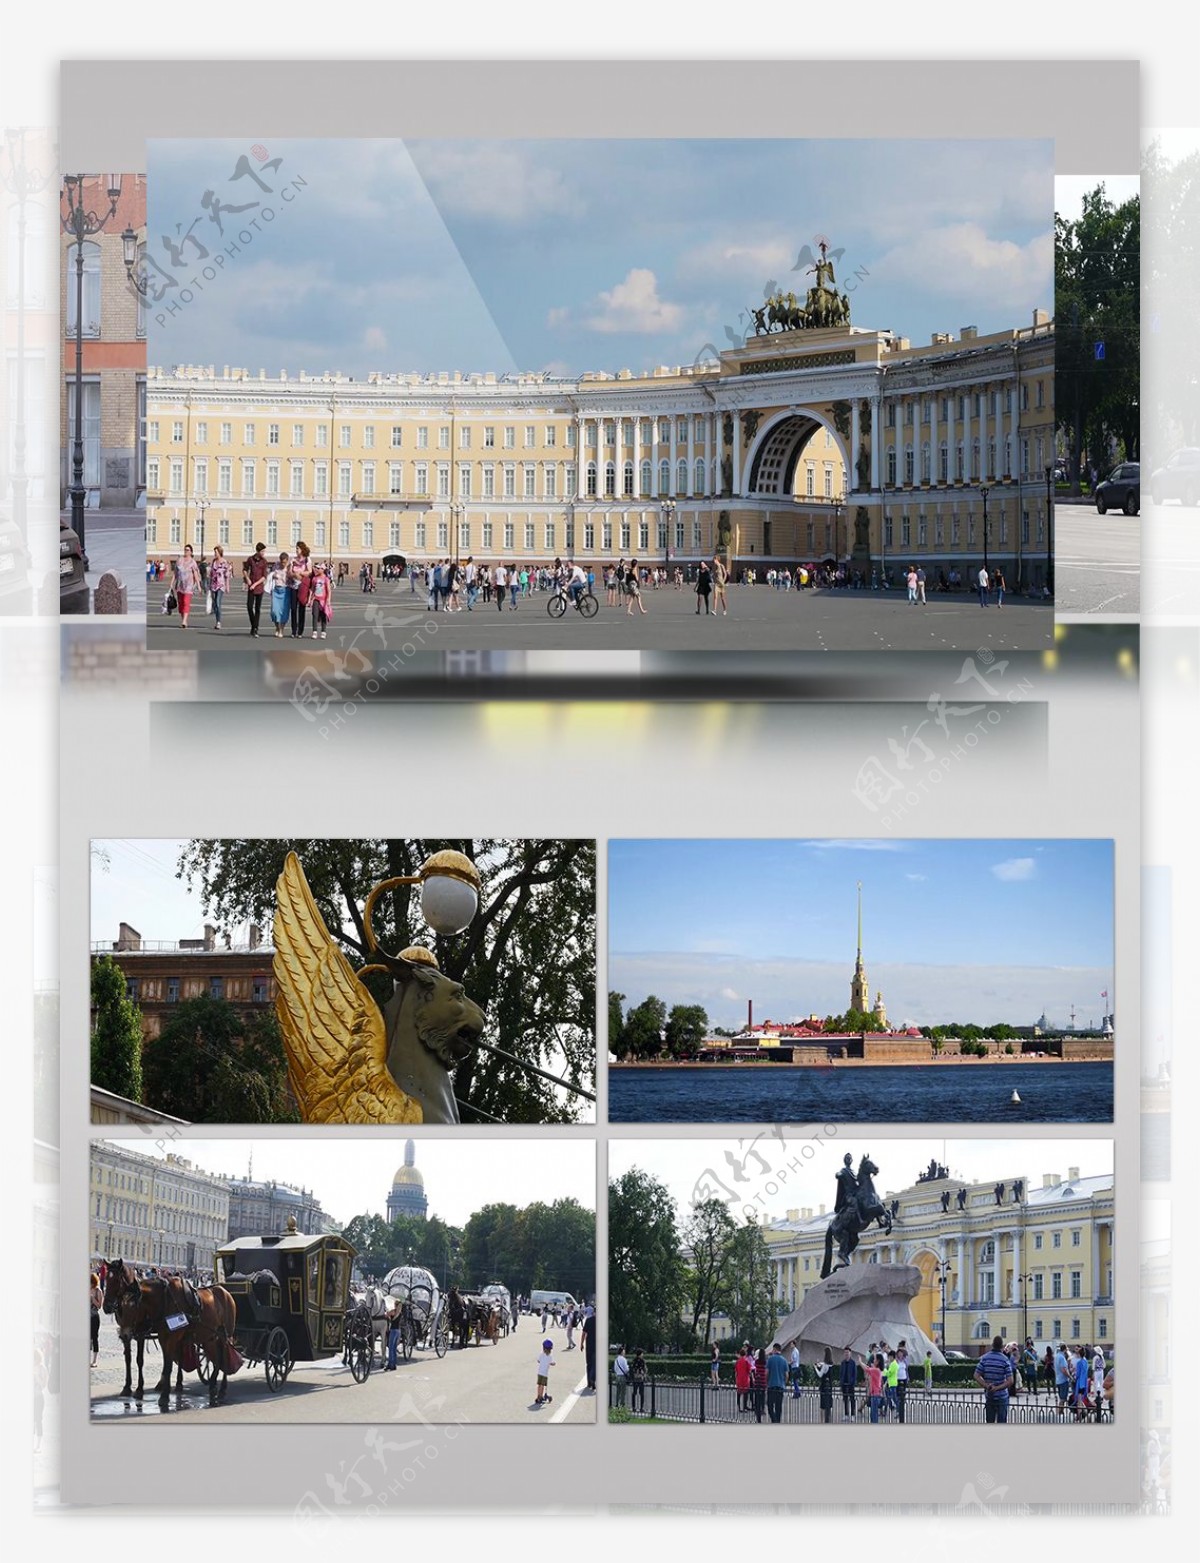 2K俄罗斯圣彼得堡旅游城市风光宣传片